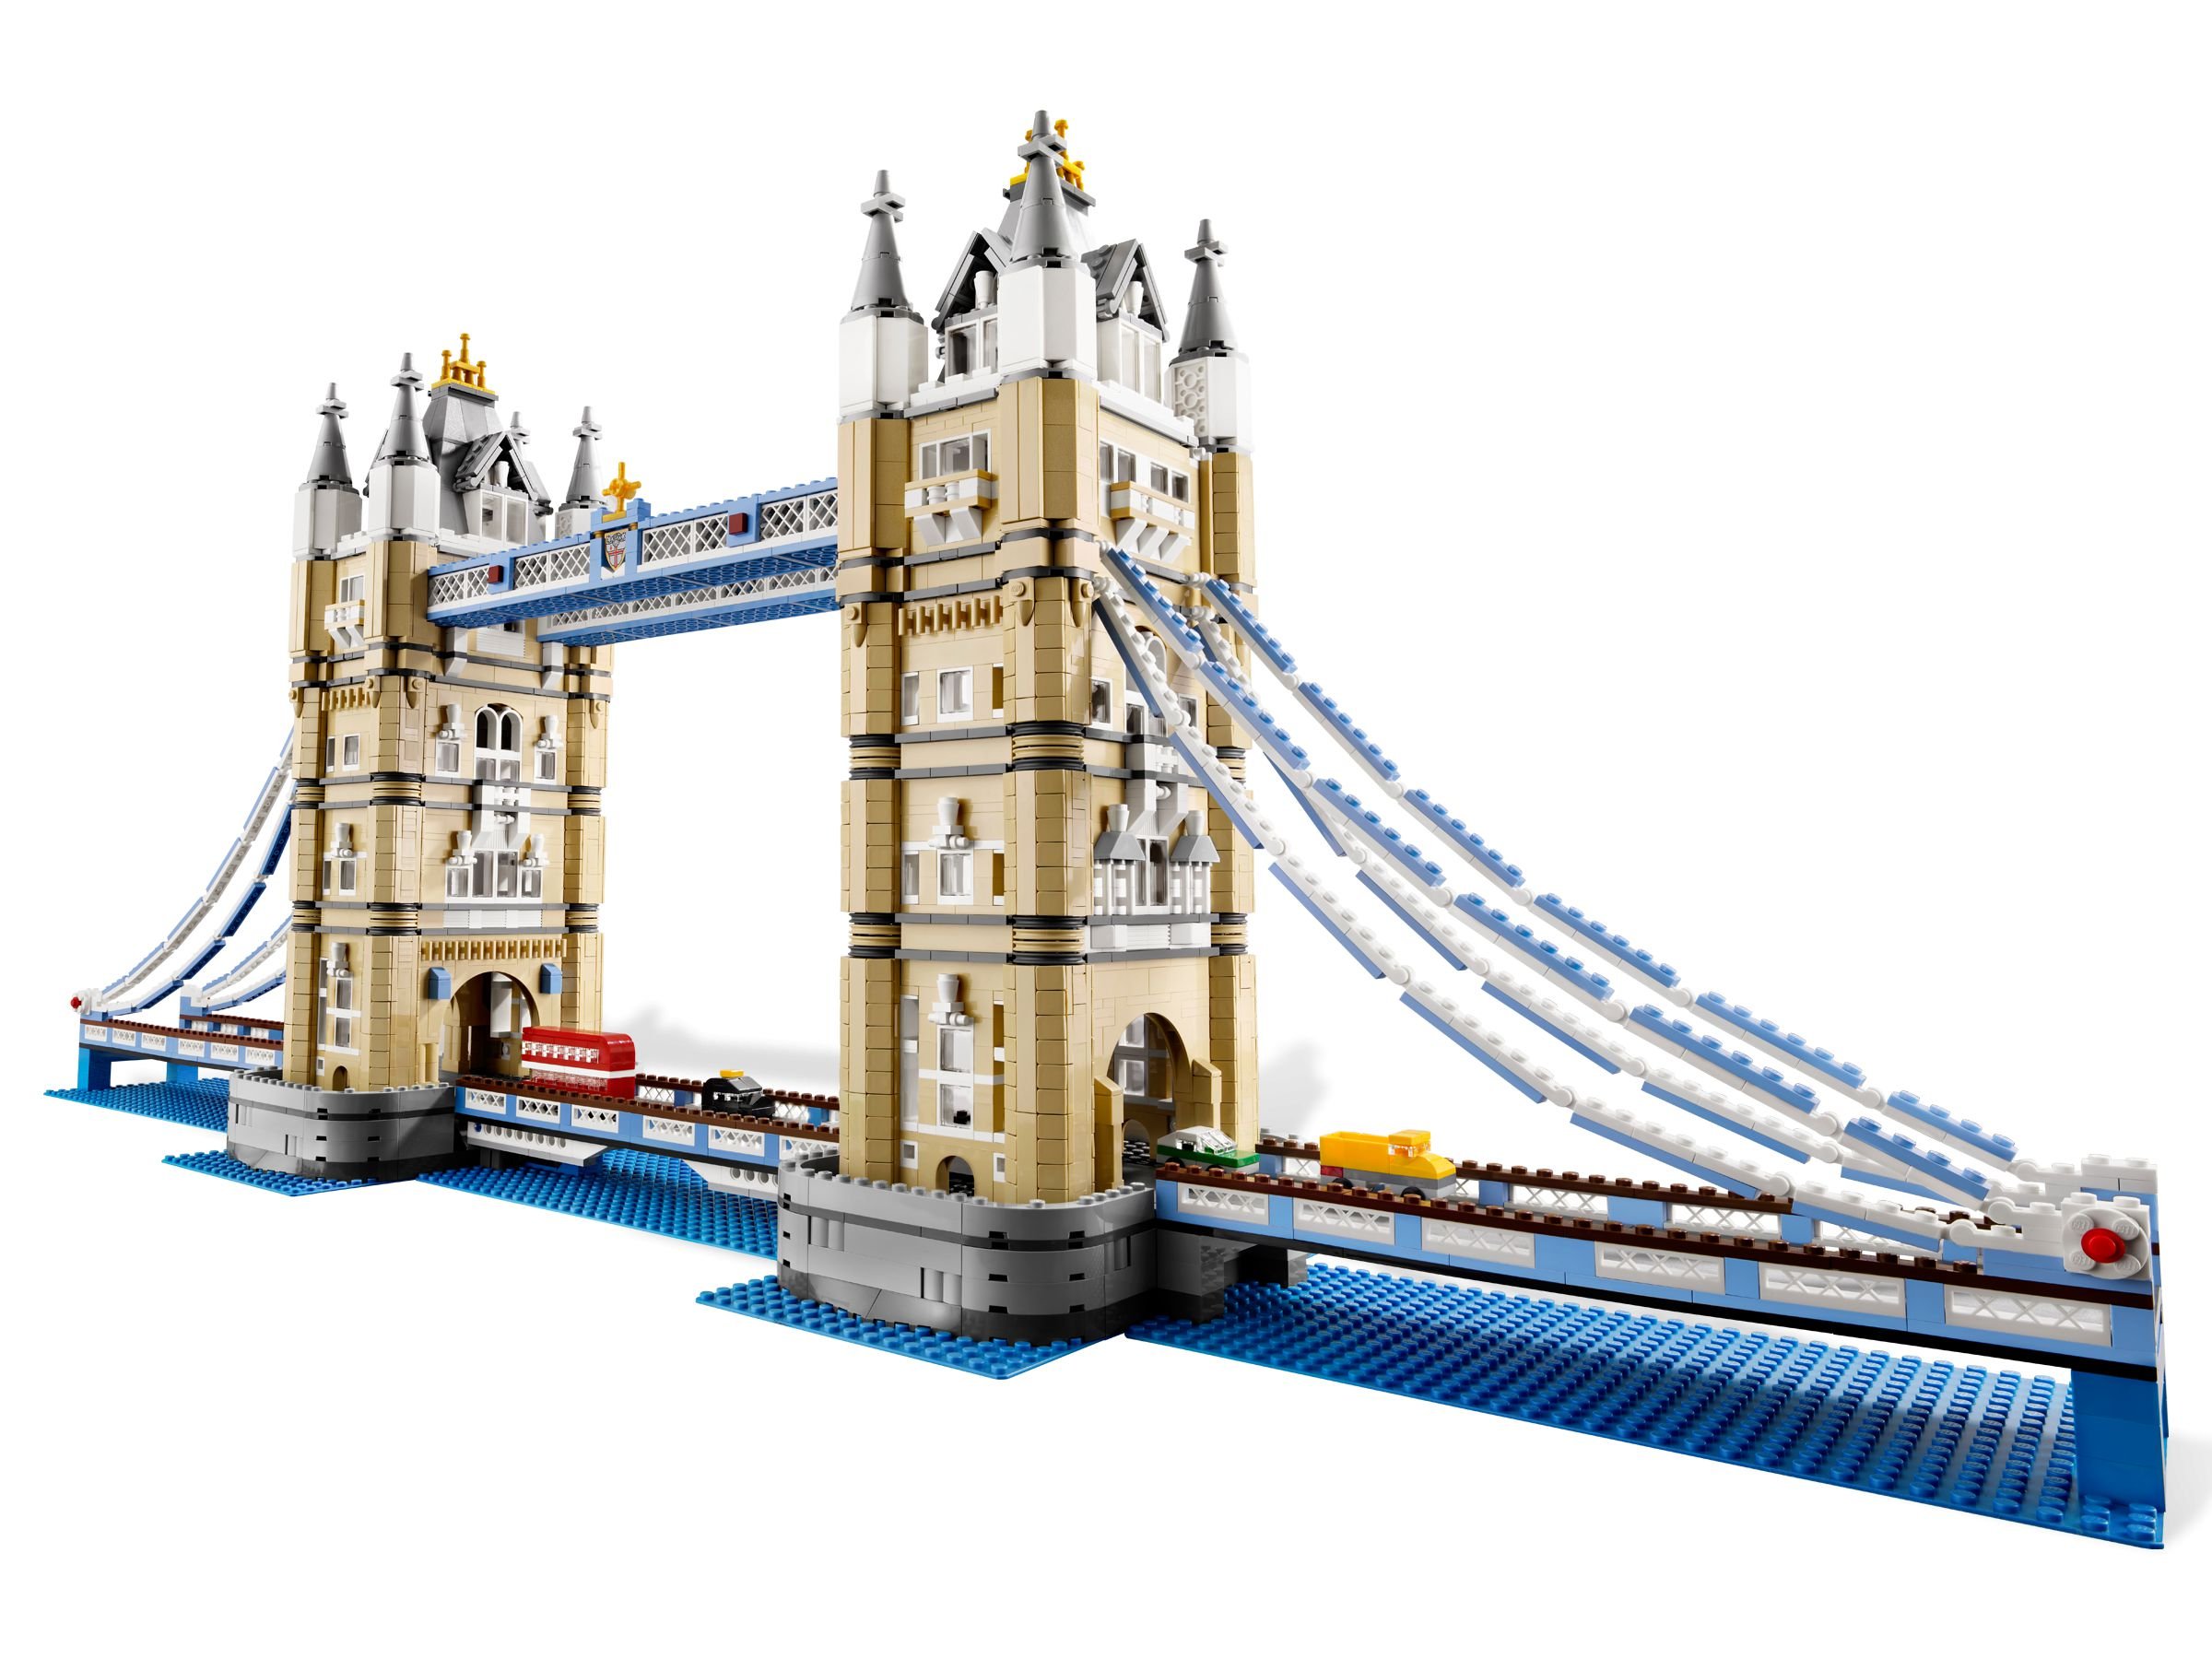 LEGO Advanced Models 10214 Tower Bridge